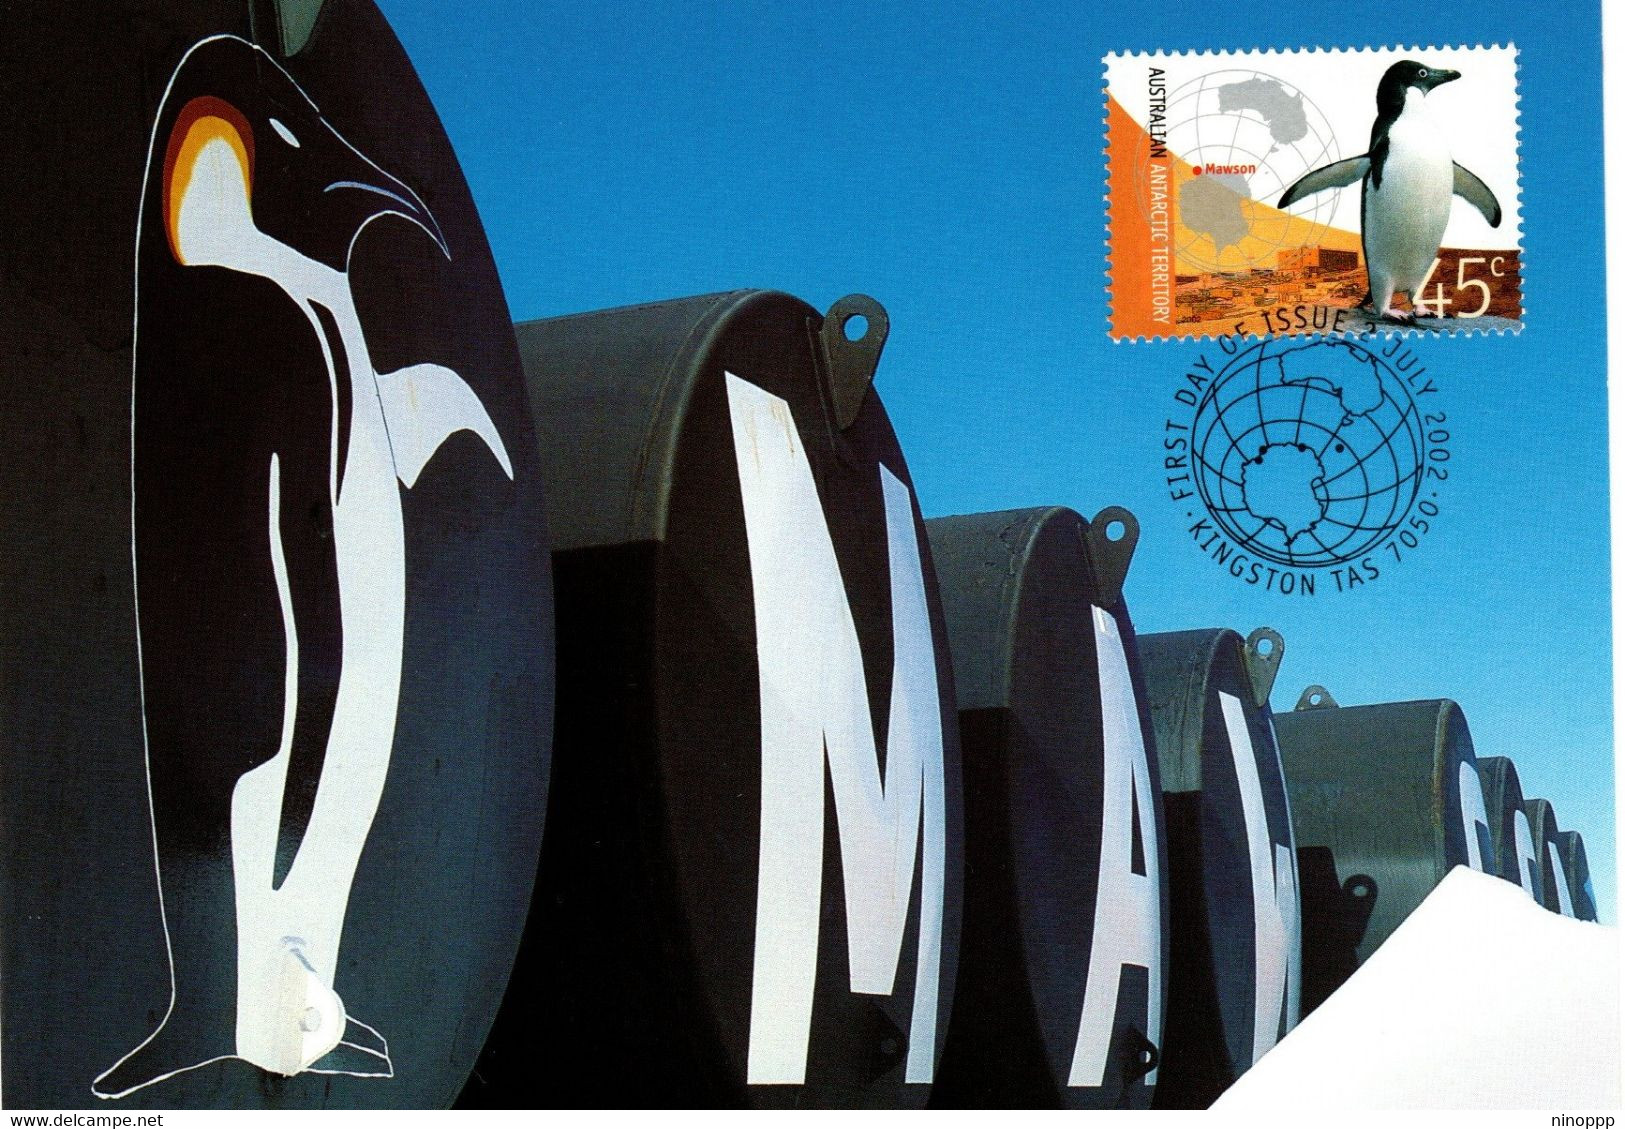 Australian Antarctic Territory 2002 Antarctic Research,Mawson Station,maximum Card - Cartes-maximum